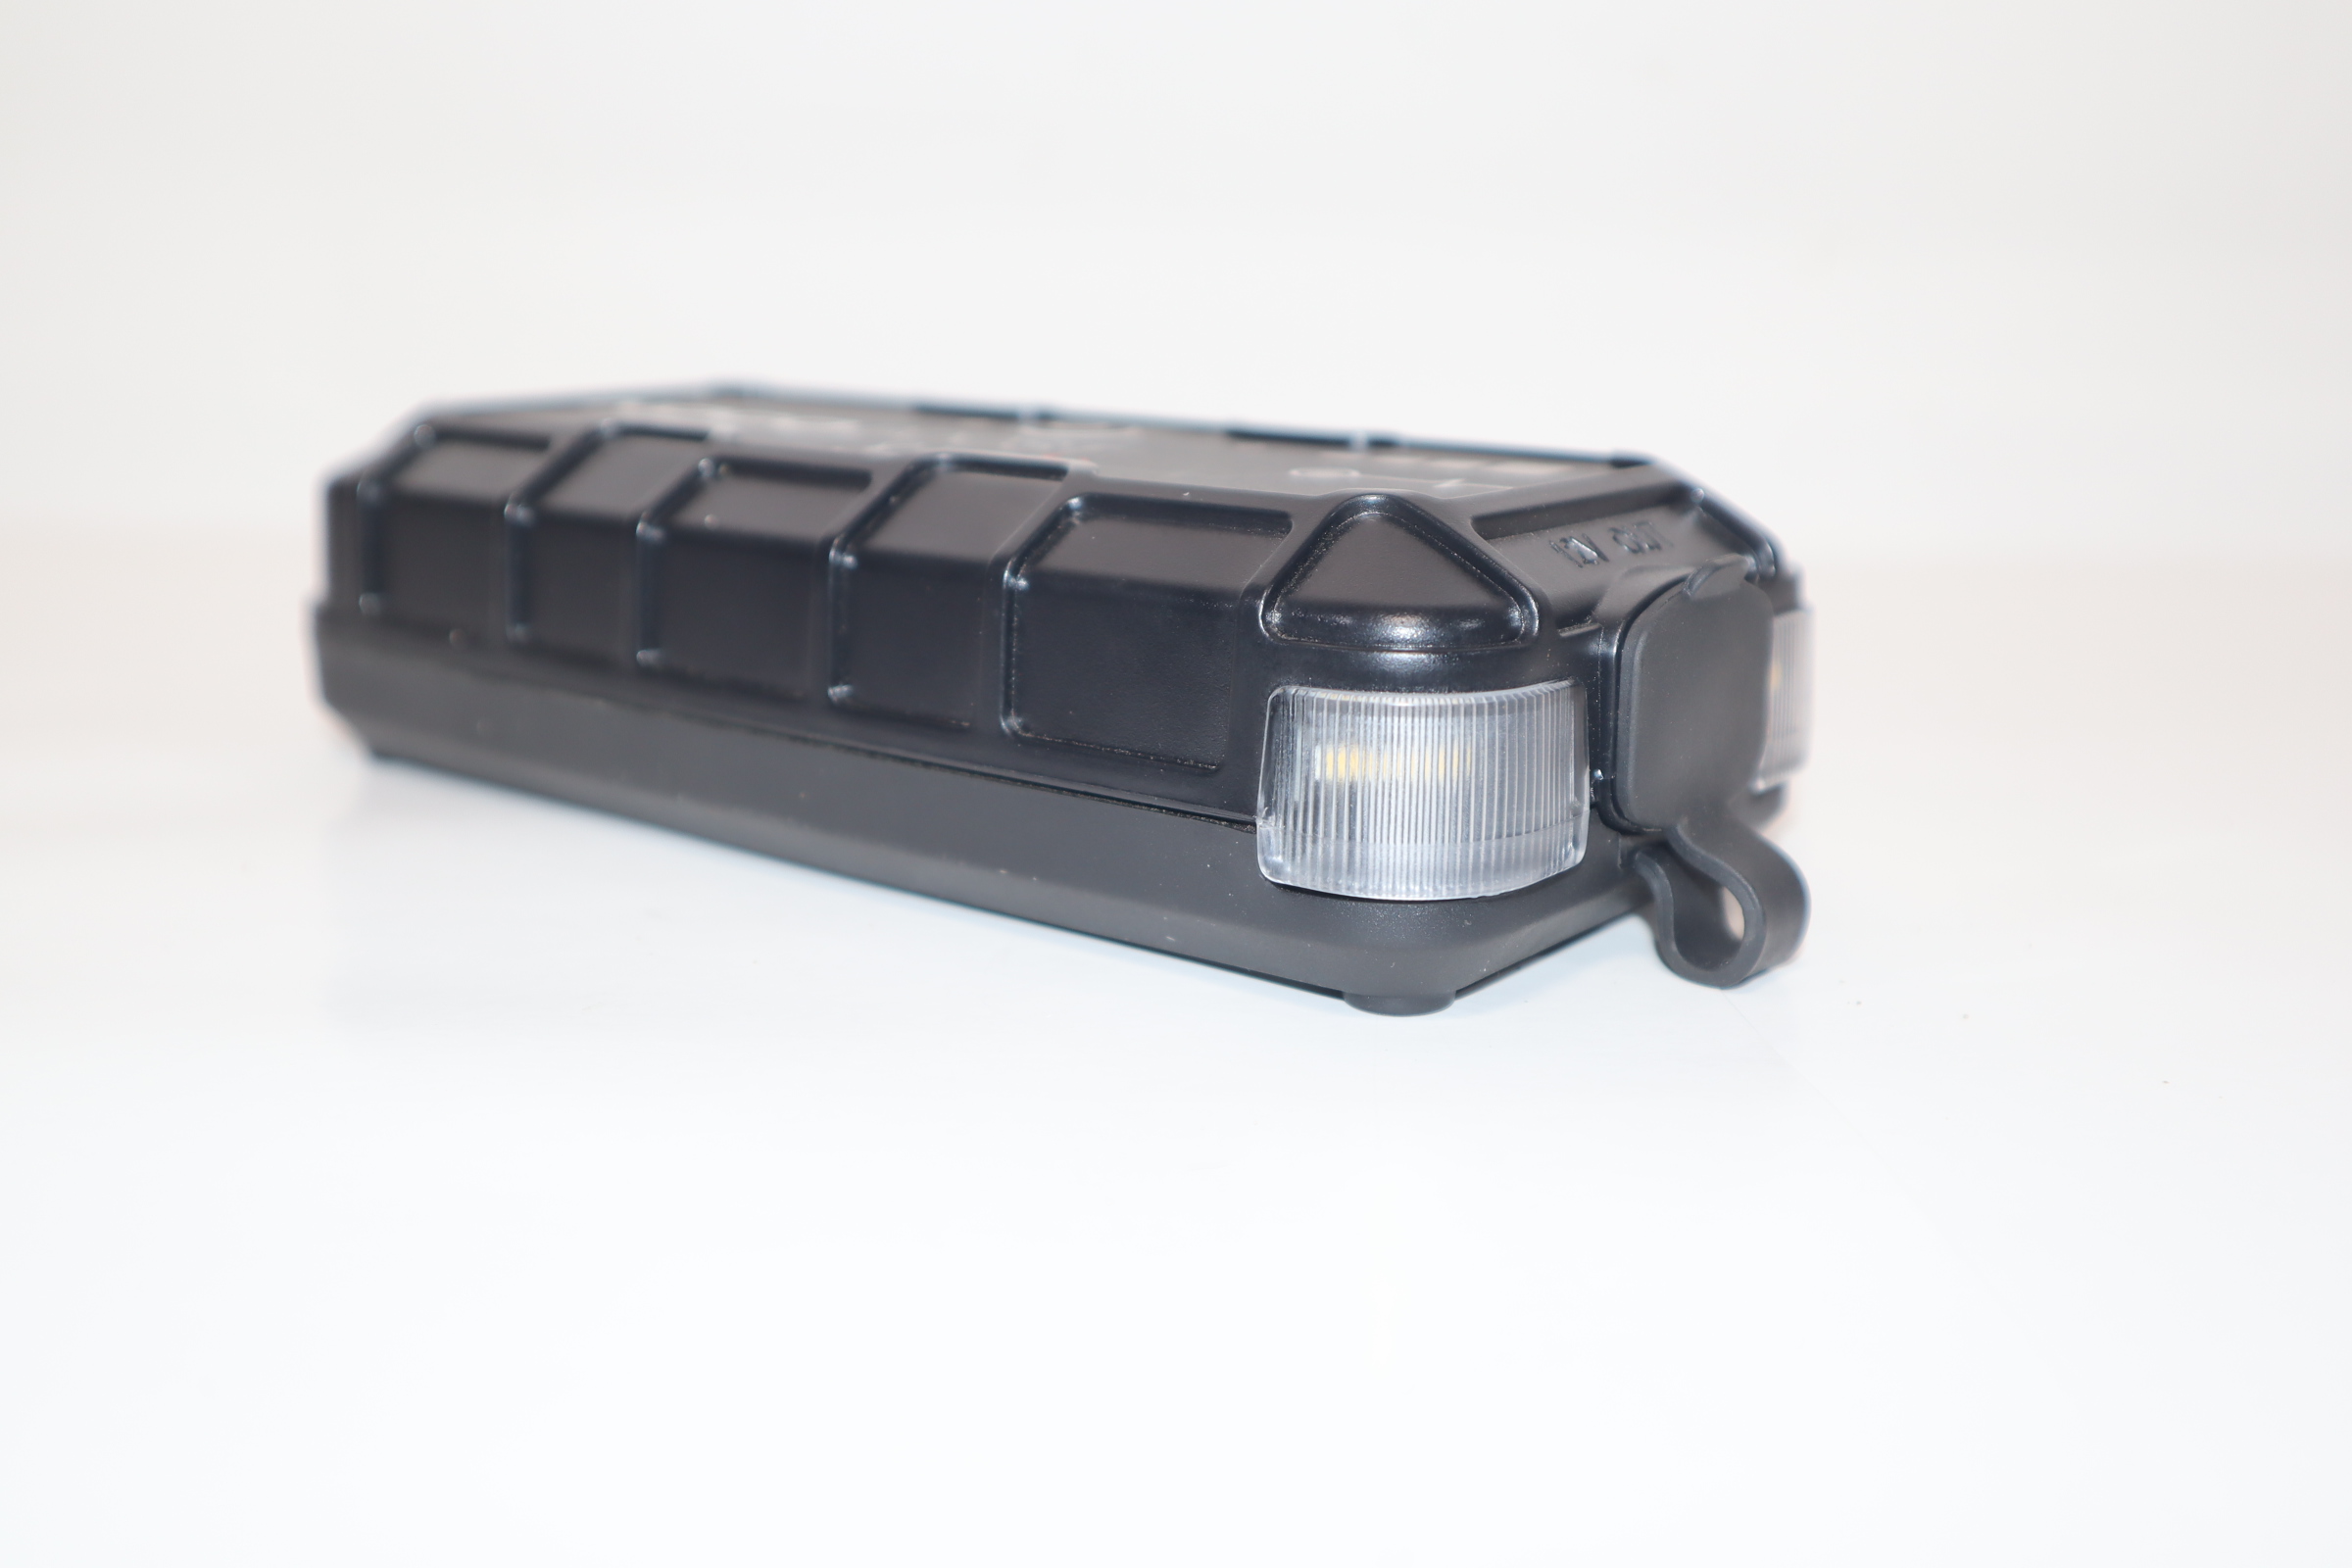 NOCO GB10S BOOST ULTRASAFE Jump Starter Kit with 100 Lumen Light